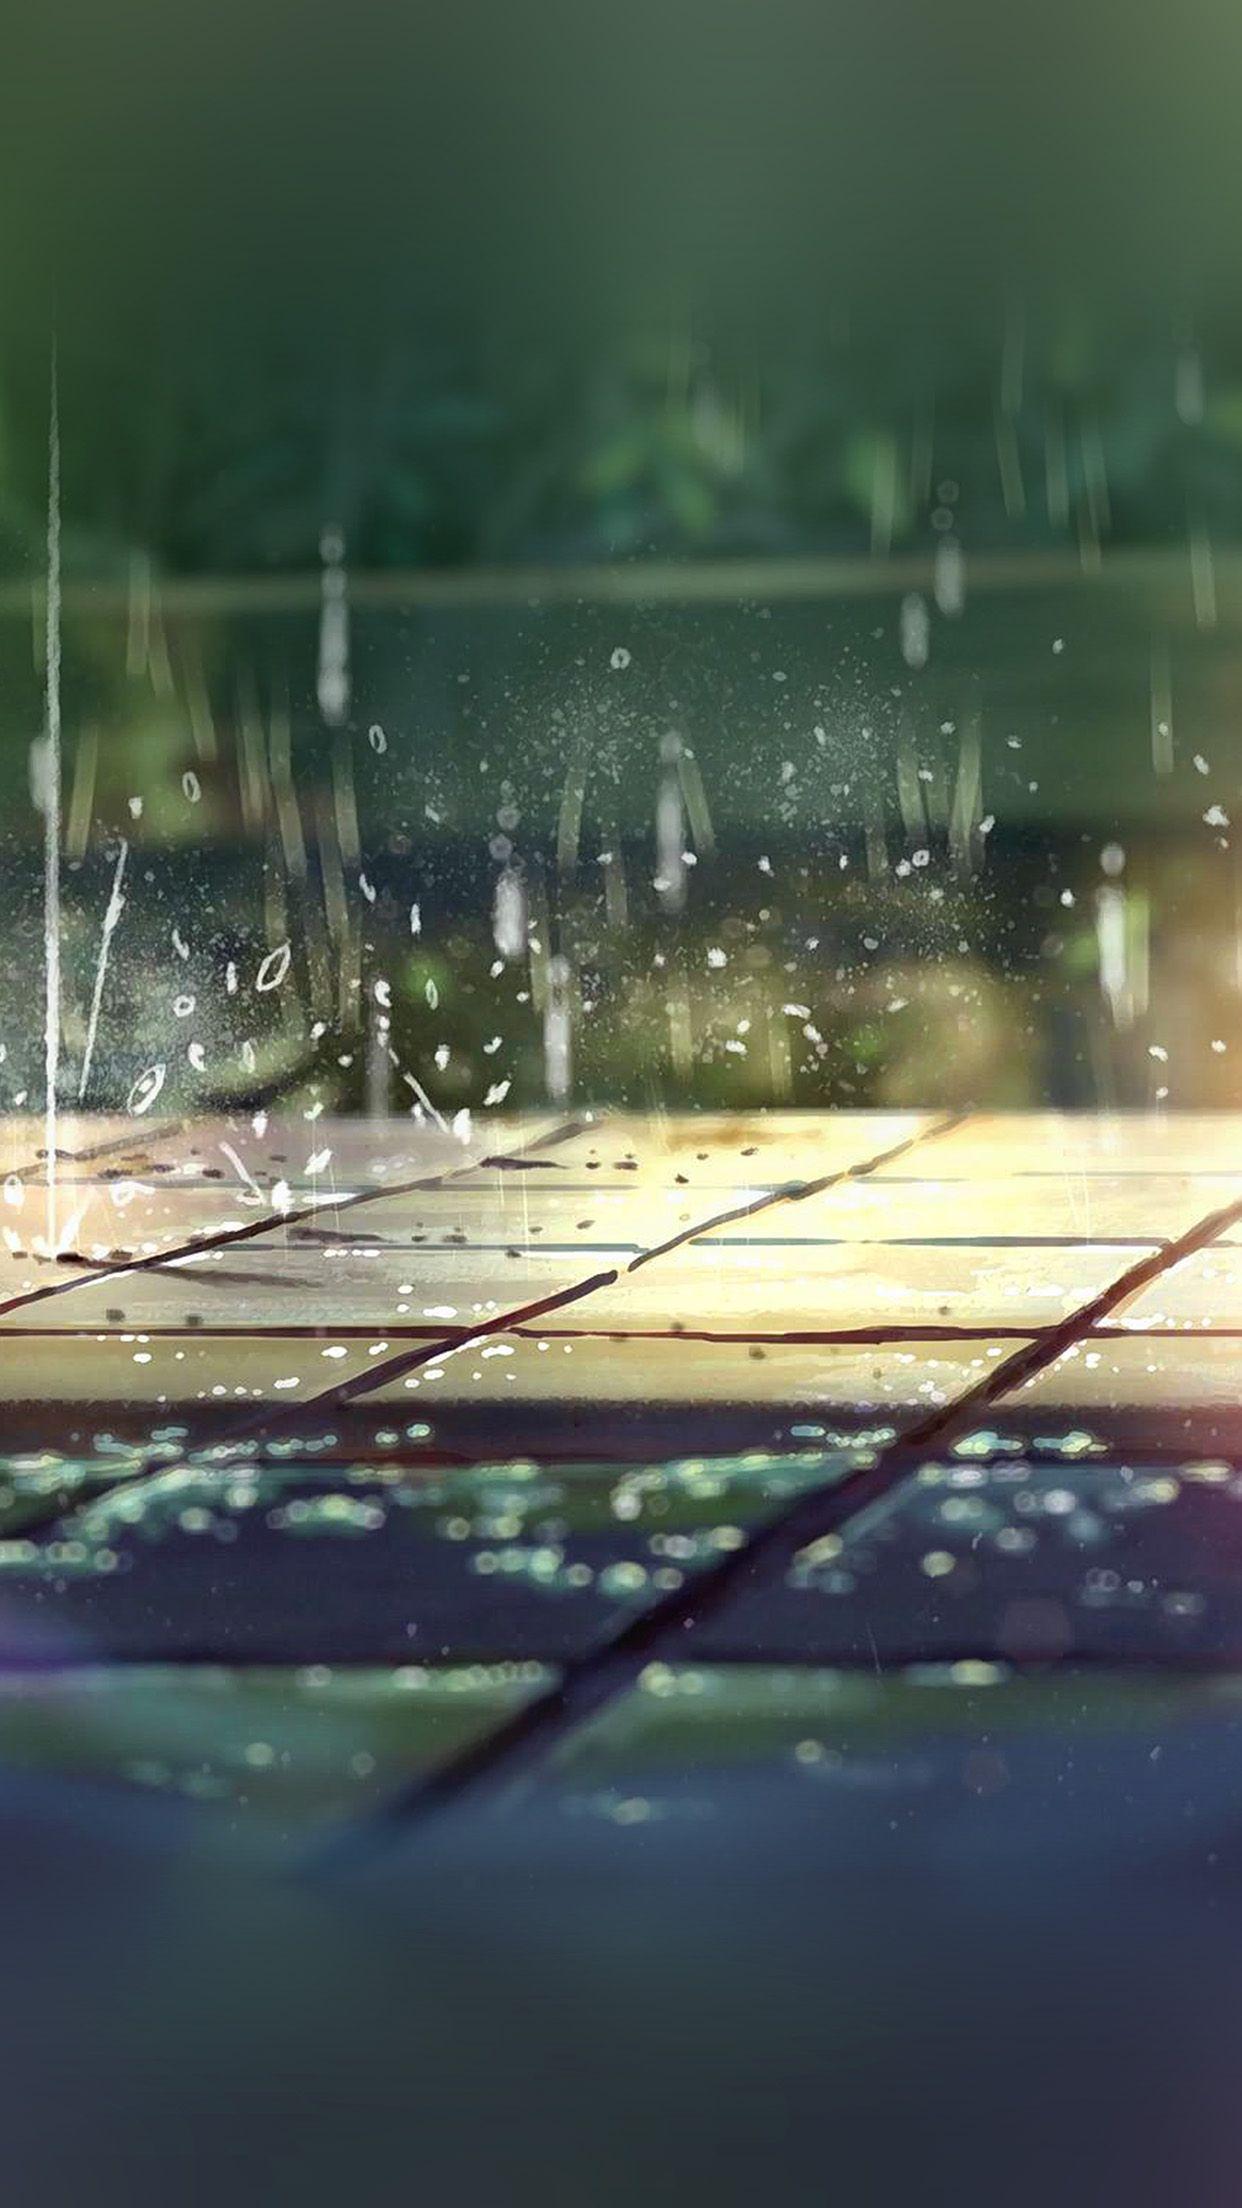 The rain aesthetic in Shinkai films  by Ishaan Bakshi  Medium